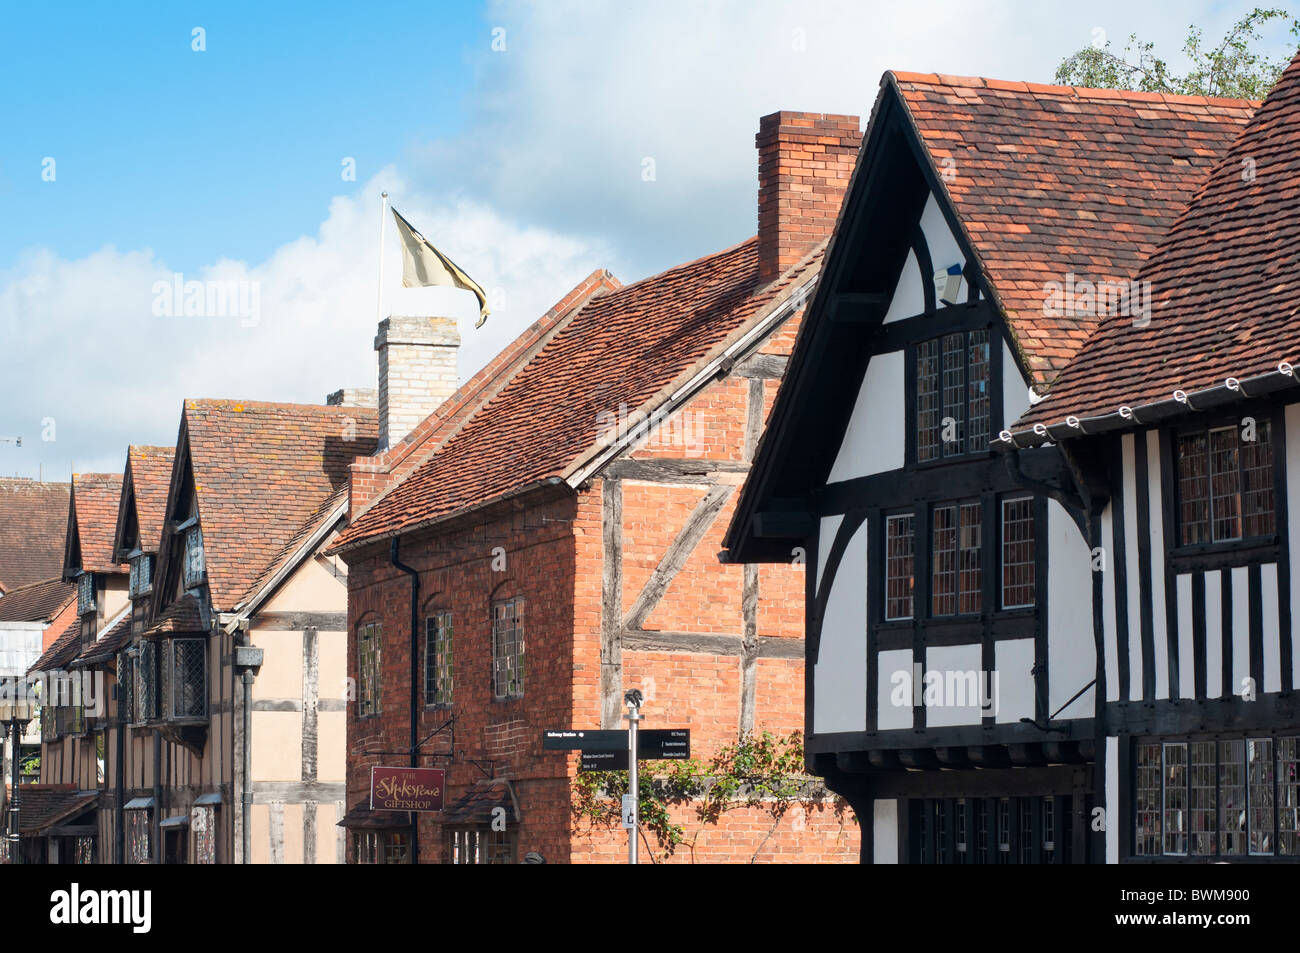 William Shakespeare birthplace dans la ville de Stratford Upon Avon, Warwickshire, Angleterre Banque D'Images